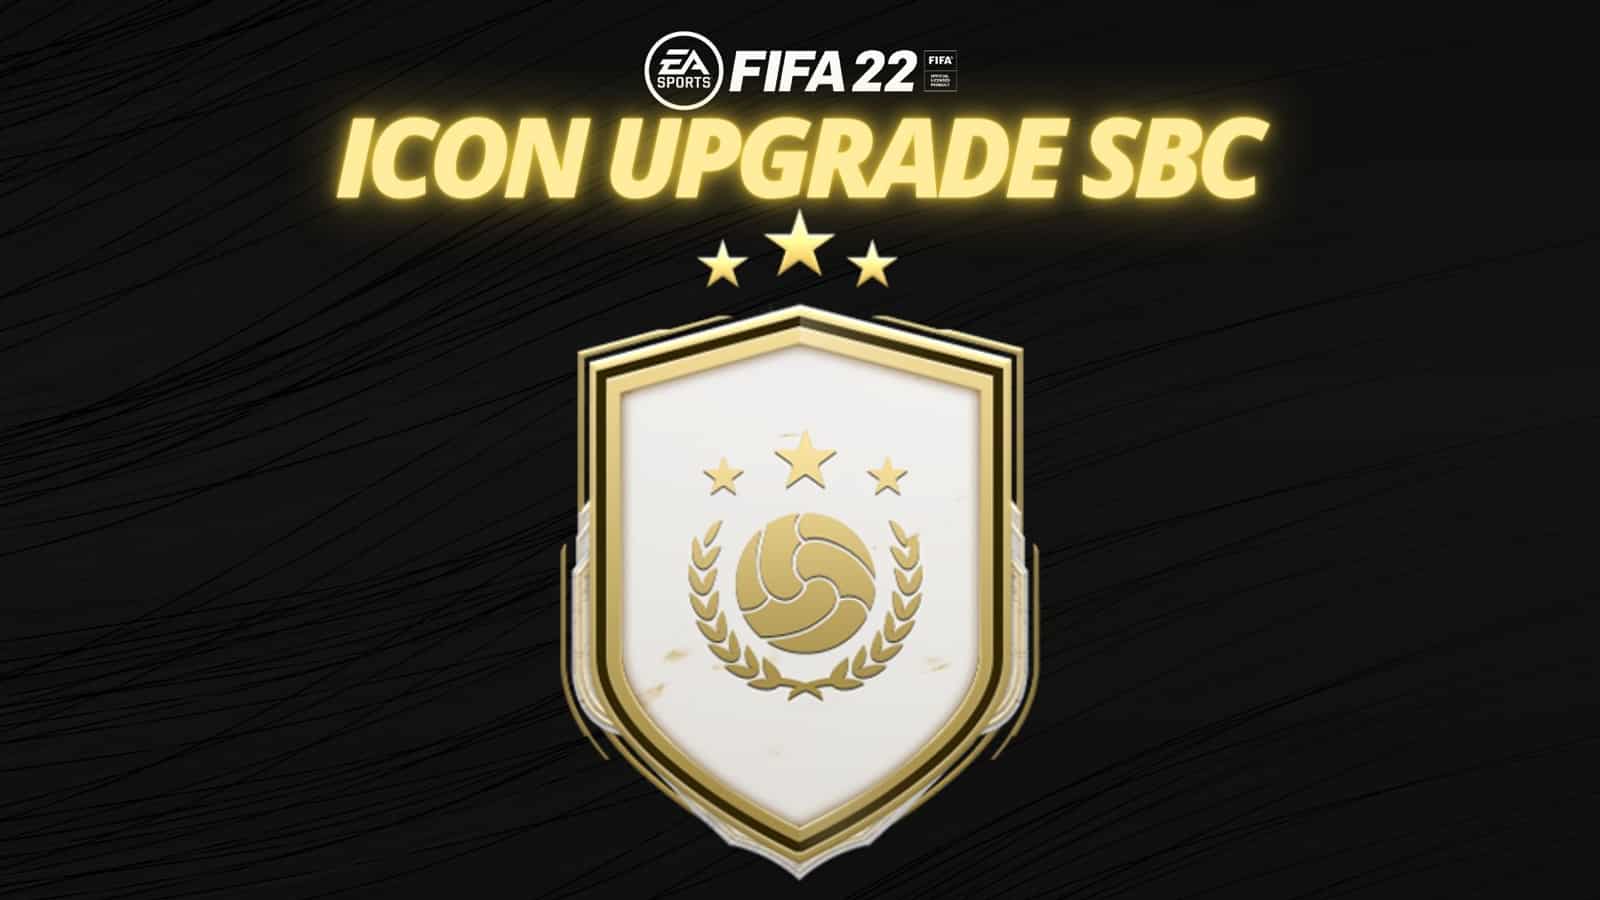 FIFA 22 Base Icon upgrade SBC